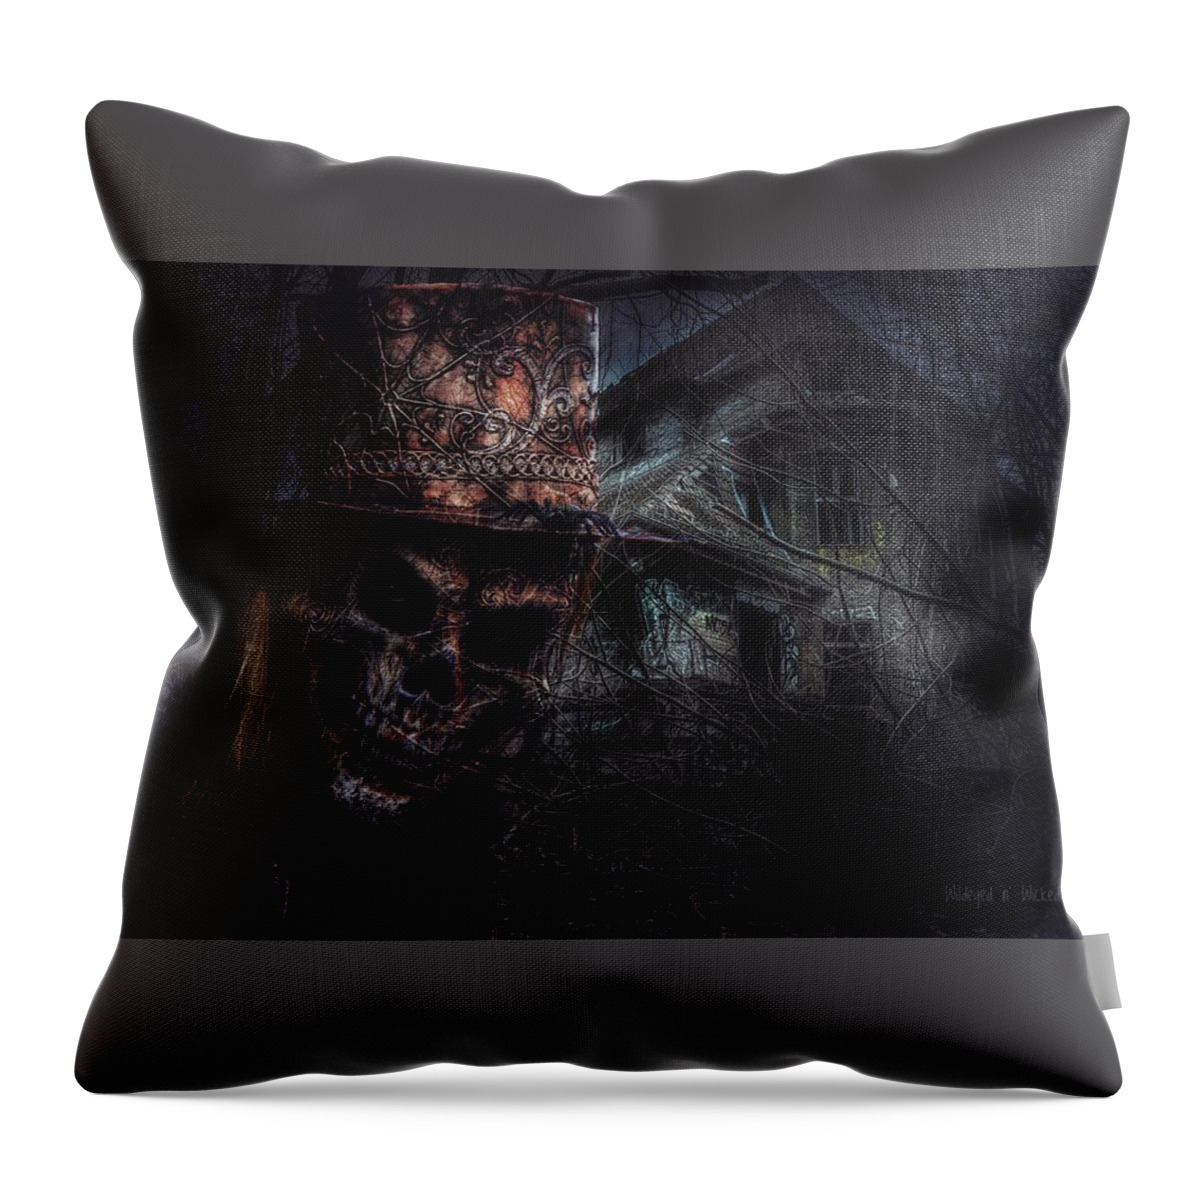 Dark Throw Pillow featuring the digital art Something Wicked by Brenda Wilcox aka Wildeyed n Wicked